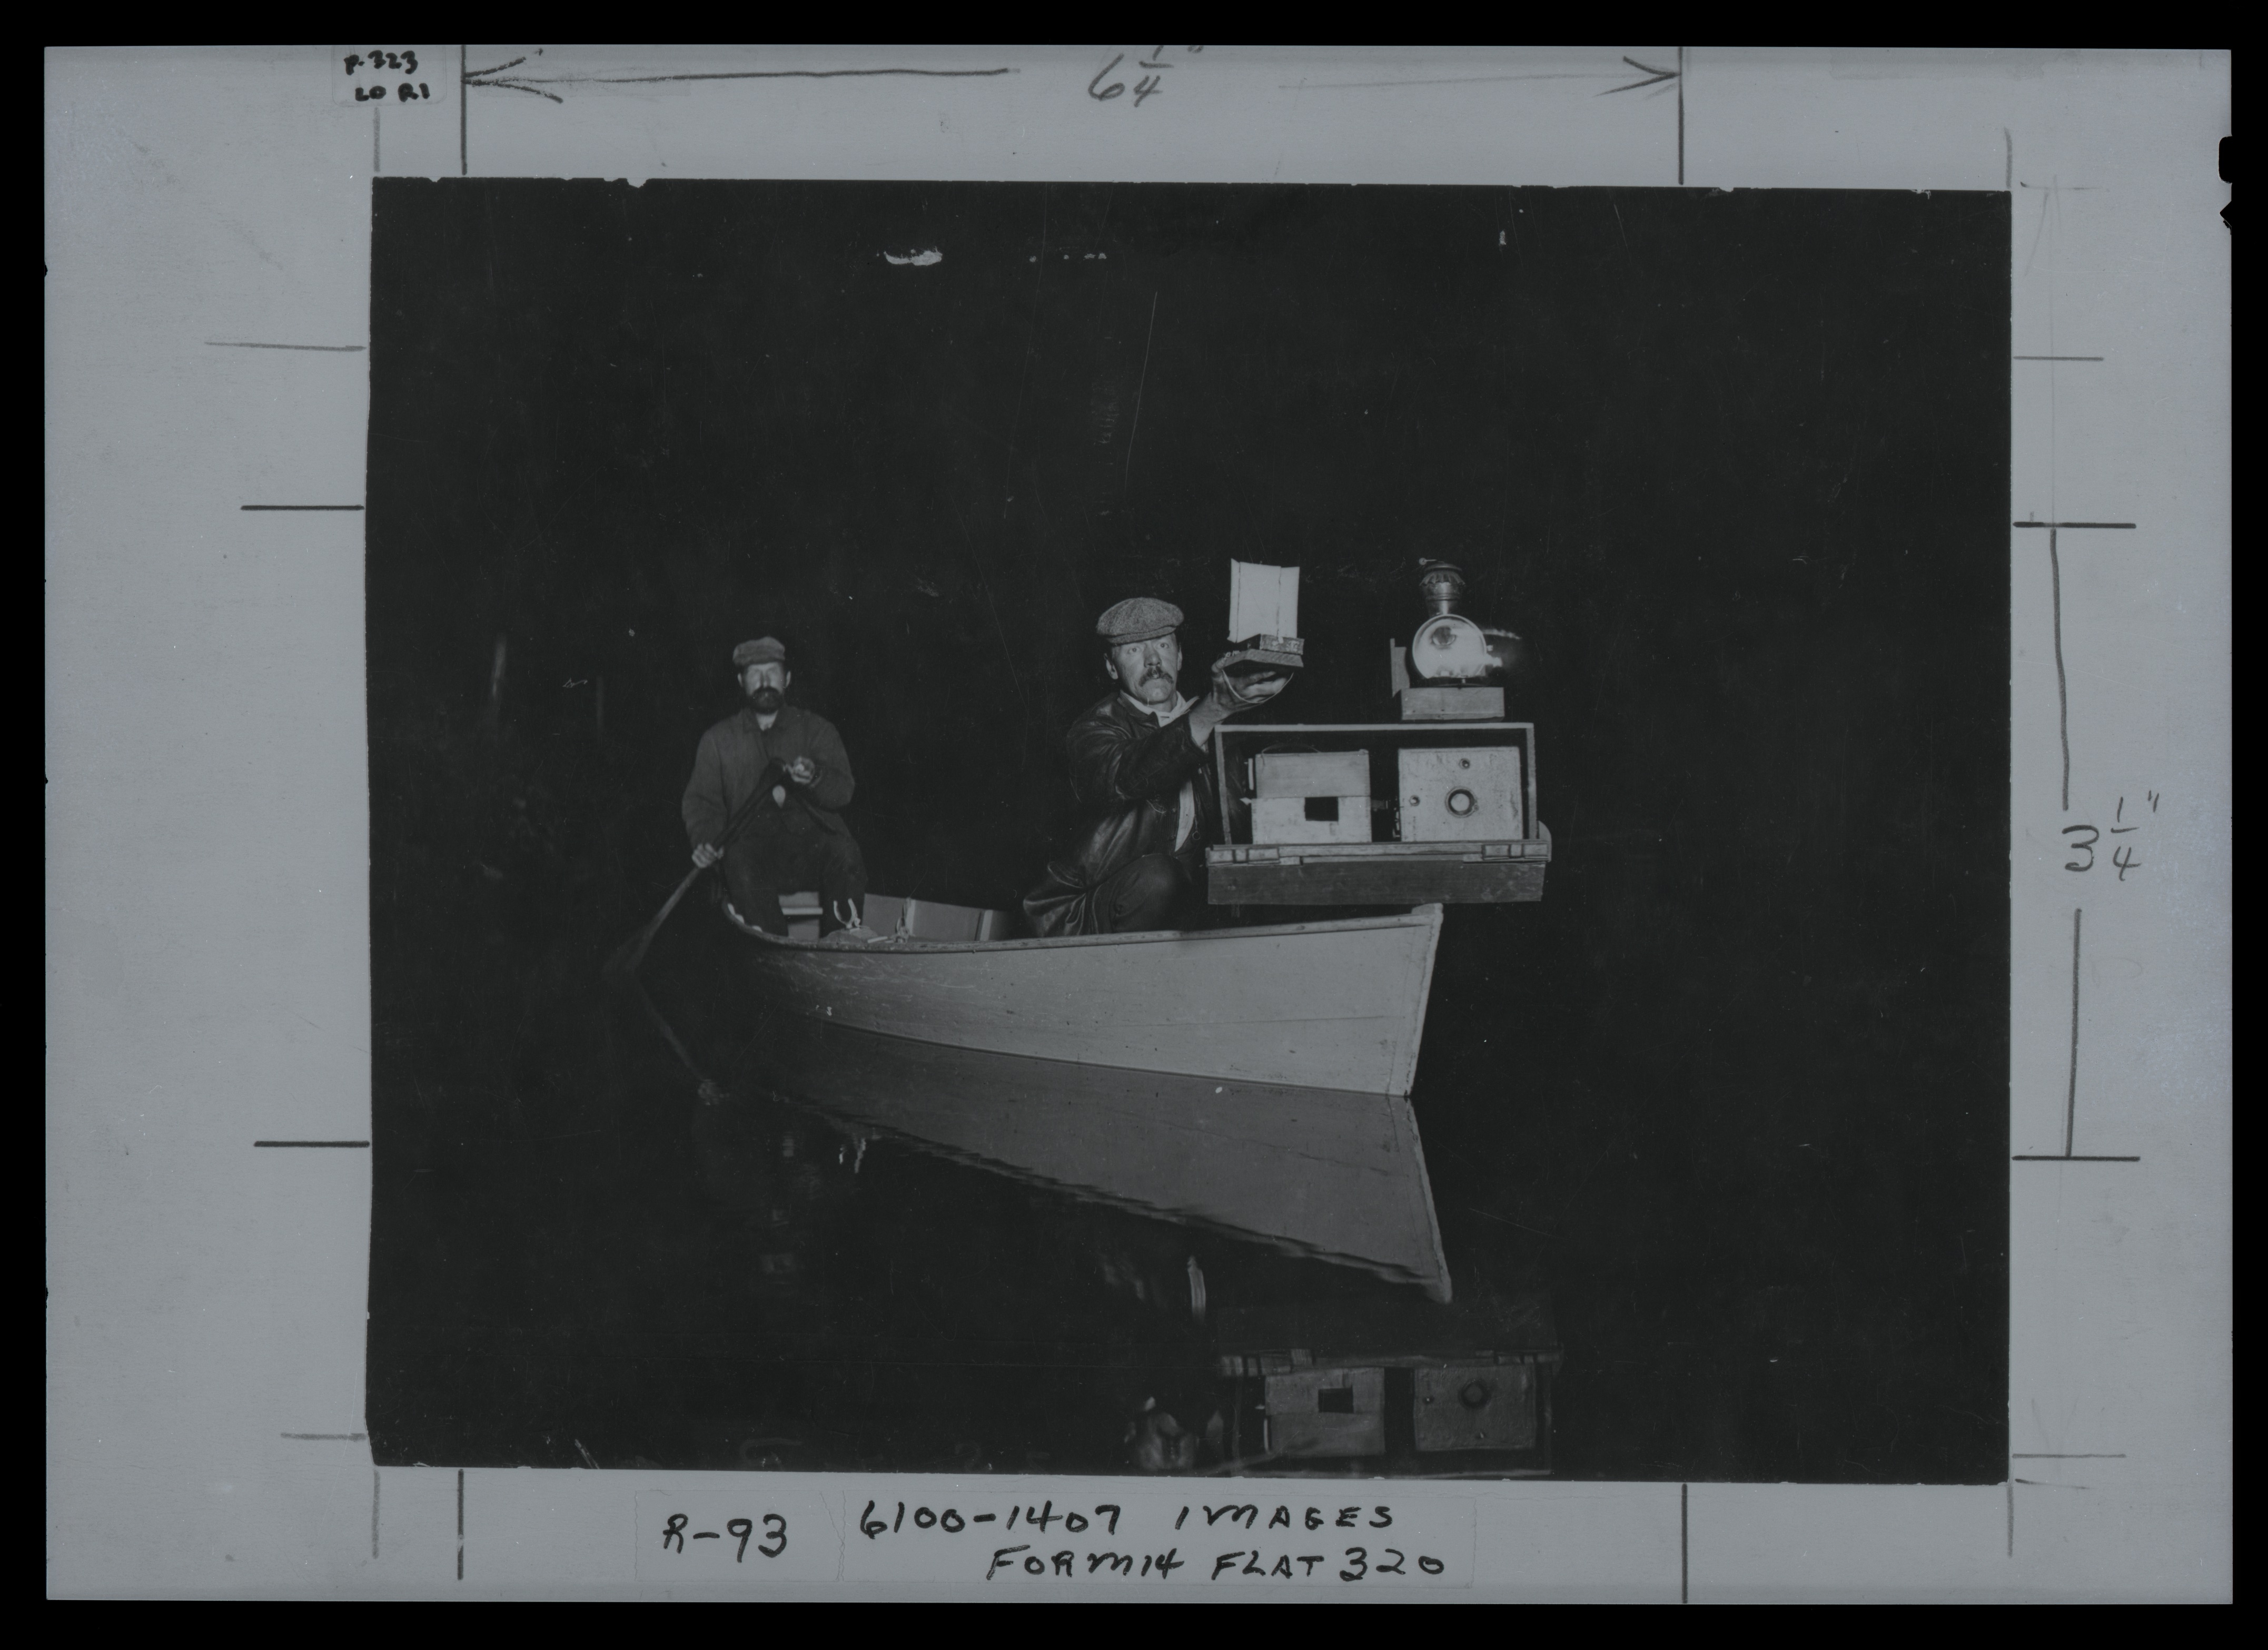 Shiras (right) and Hammer on Whitefish Lake, circa 1900.